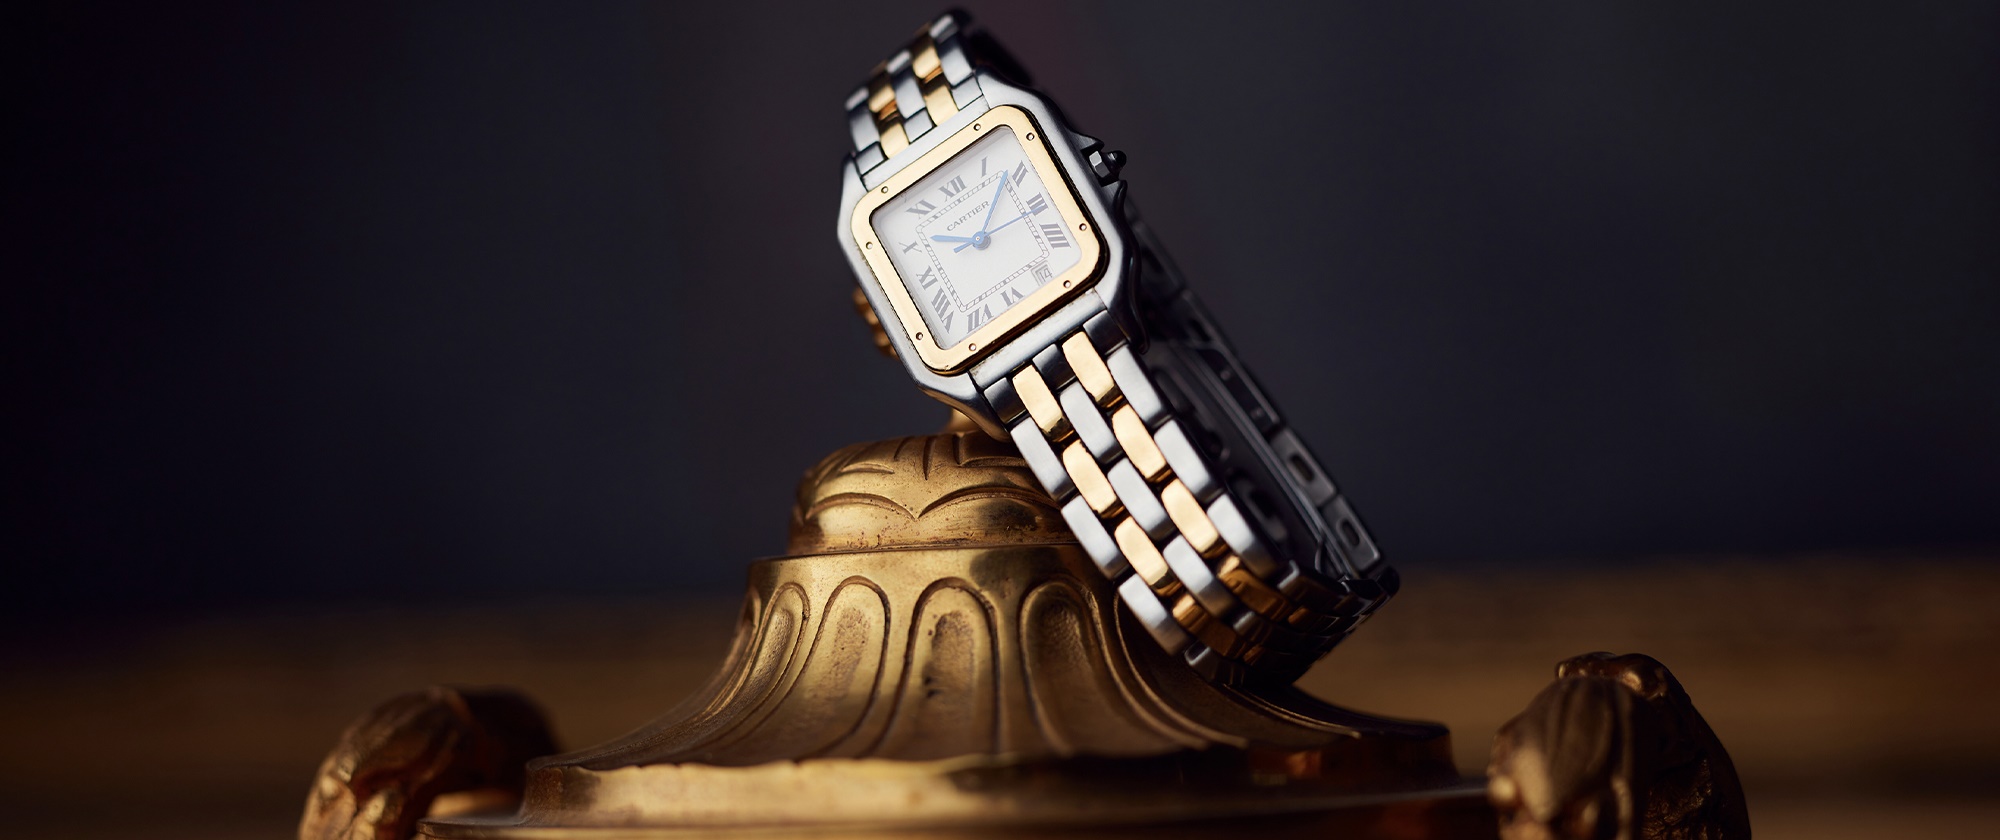 Cartier: Defining a Classic